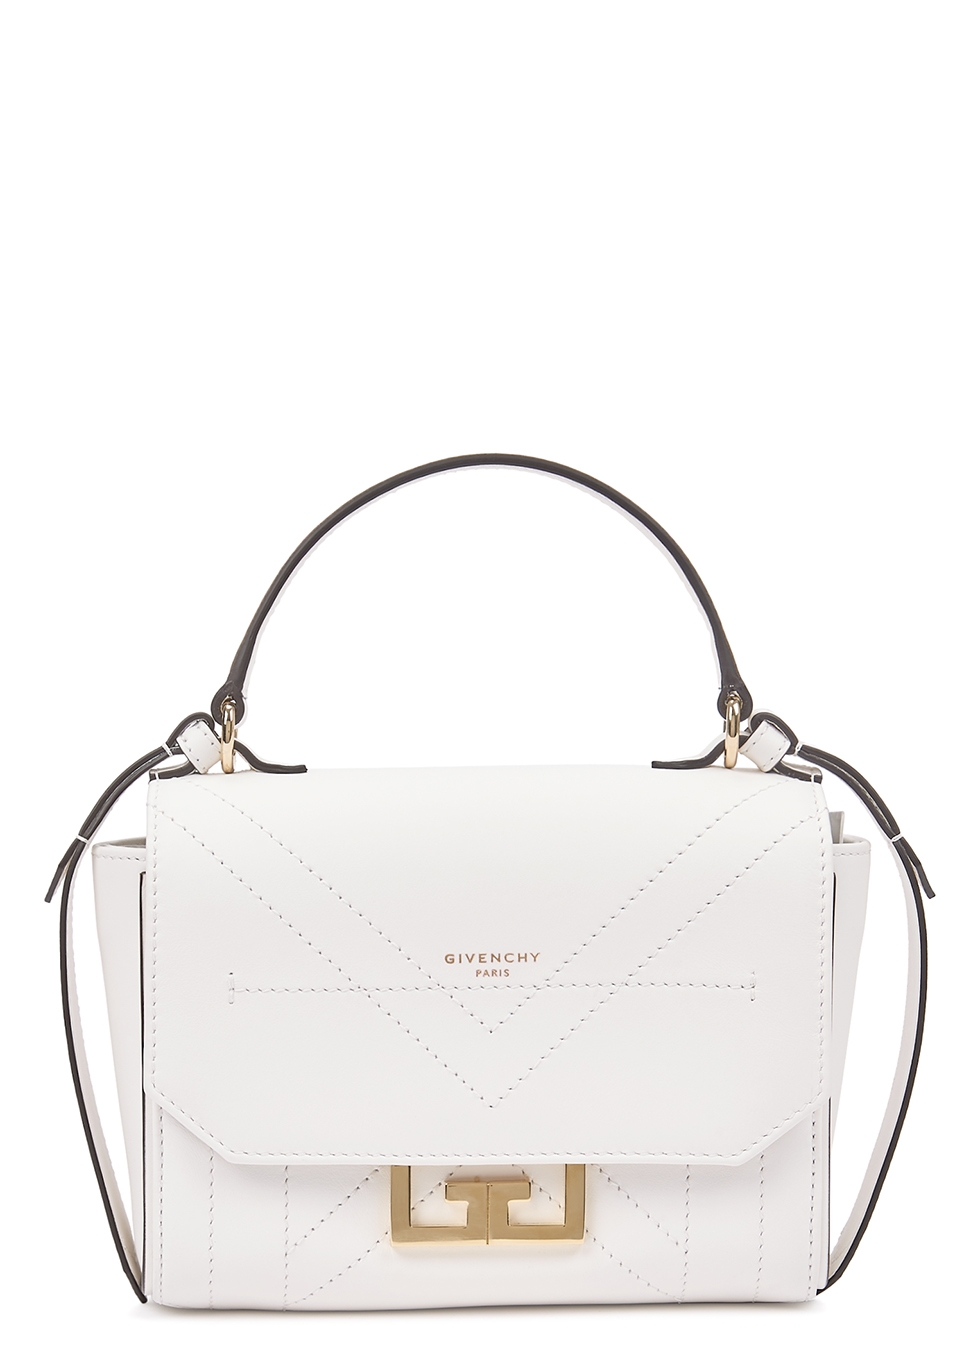 Givenchy Eden mini white leather cross-body bag - Harvey Nichols